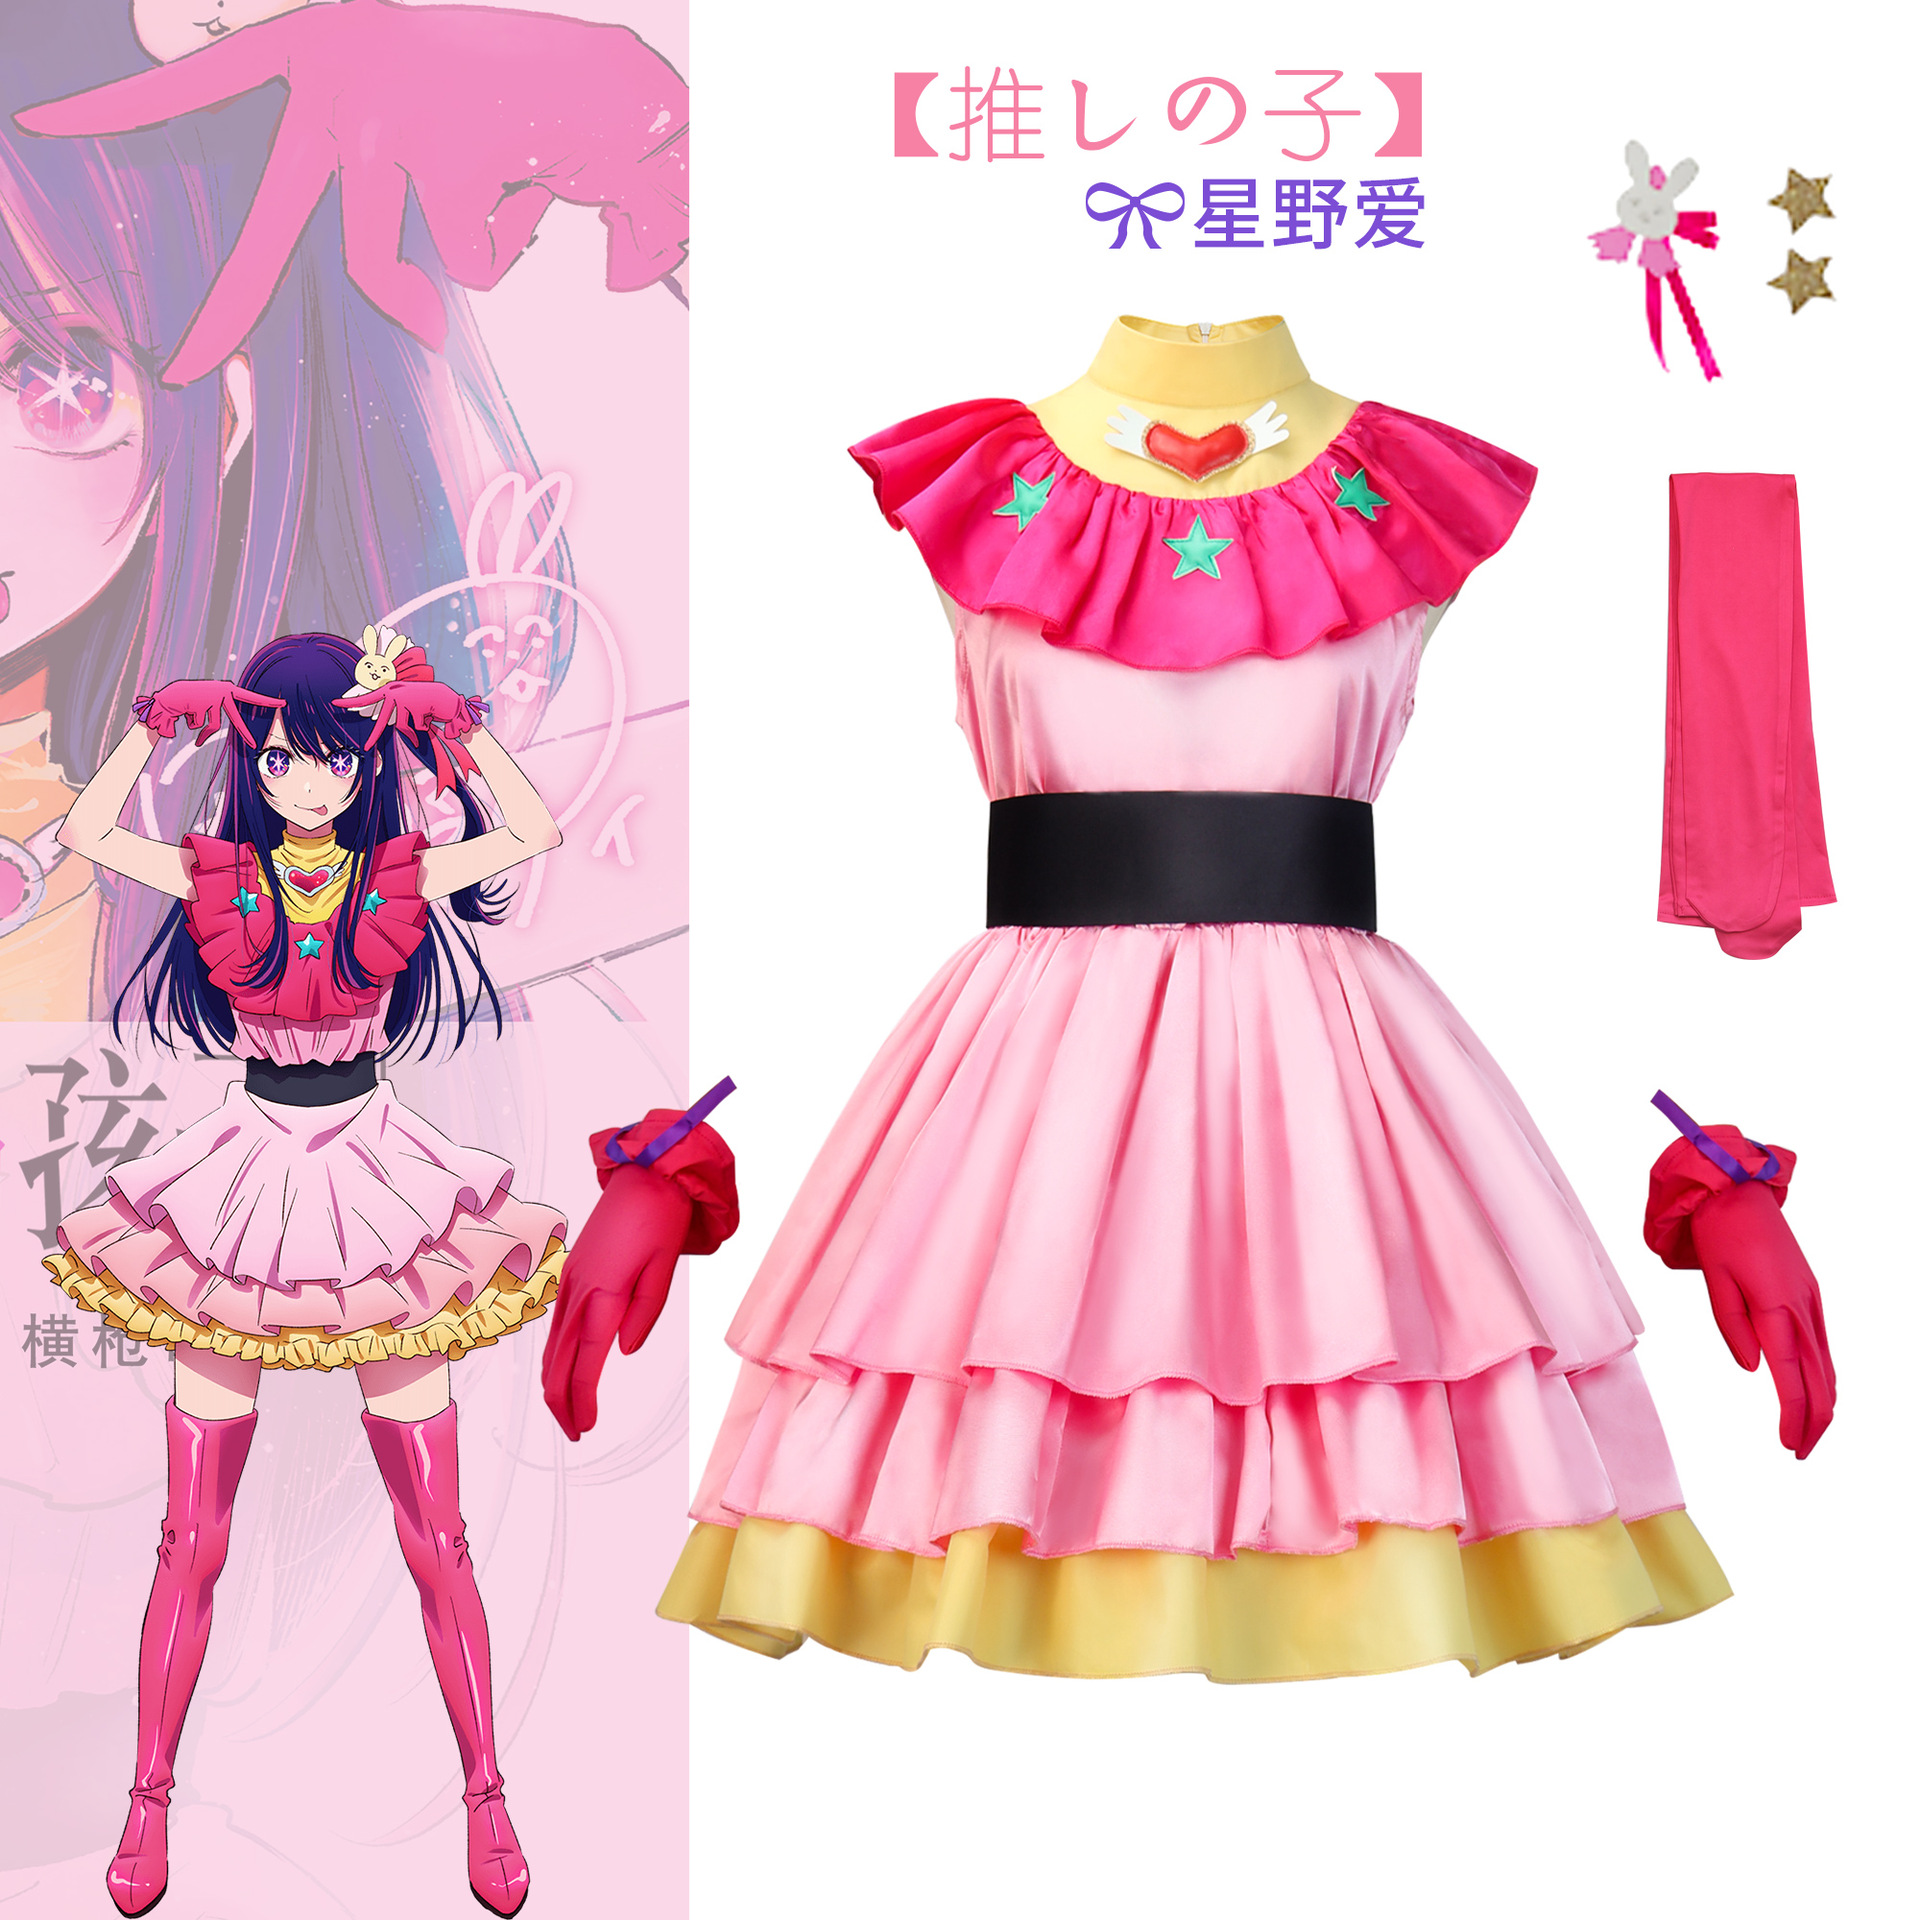 The children's cosplay costumes I recommend Hoshino Ai Aqua Hoshino Ruby and Magana cos clothing